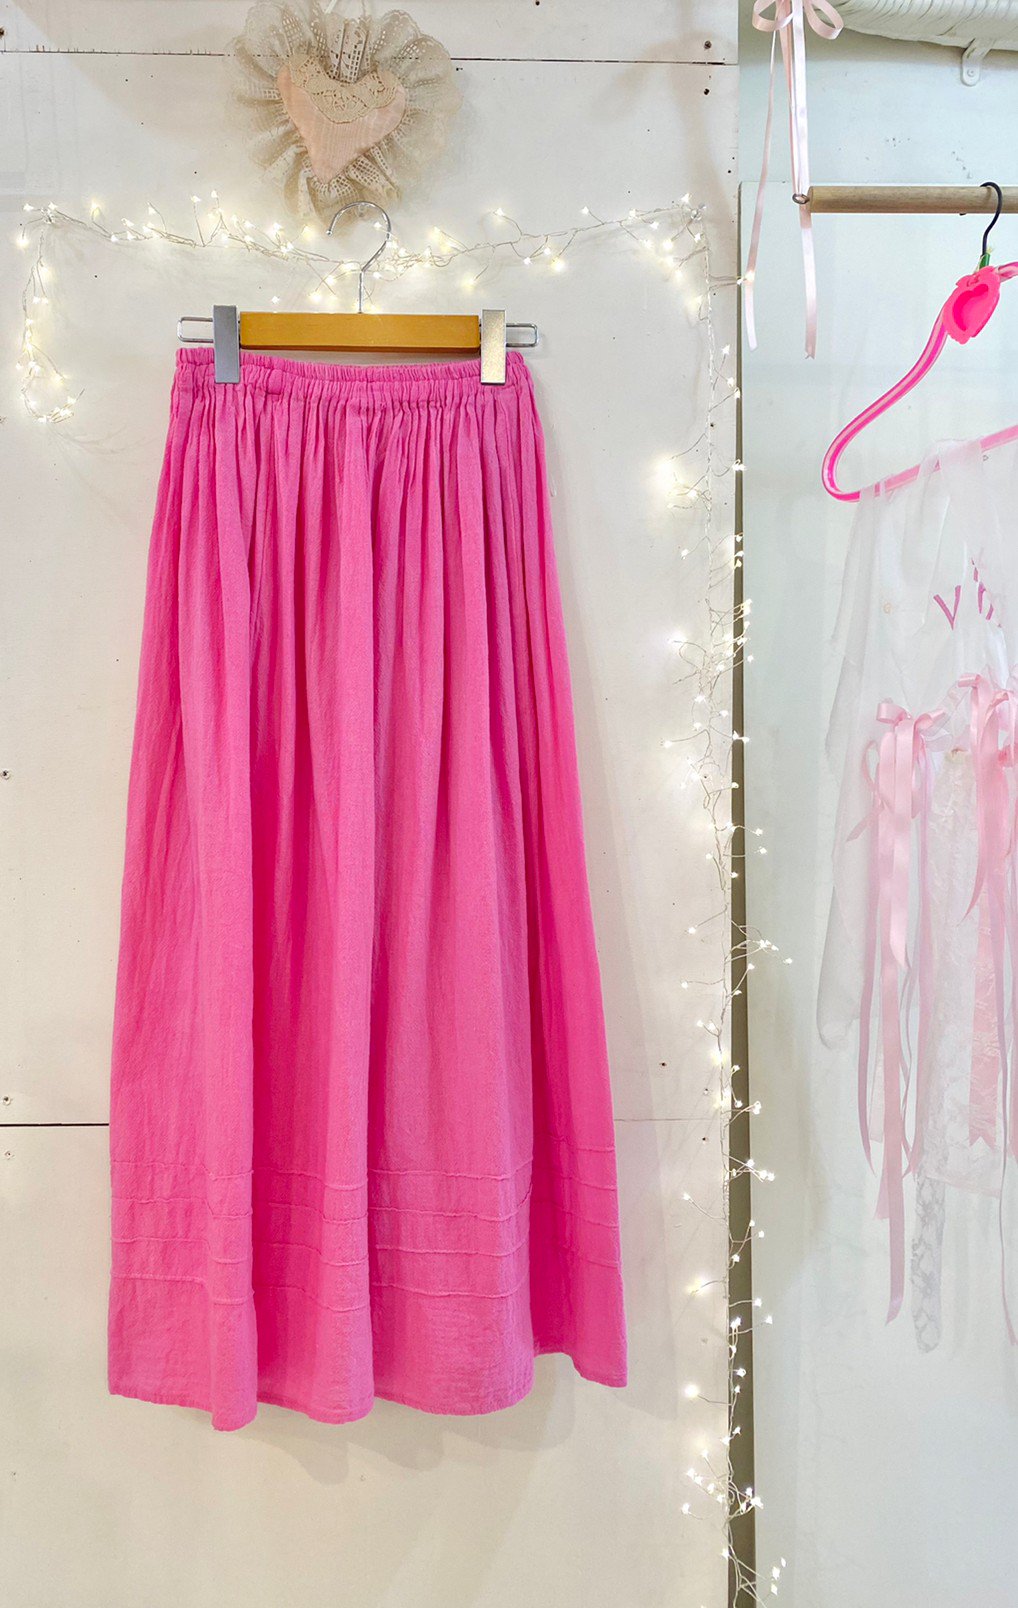 vivid pink skirt